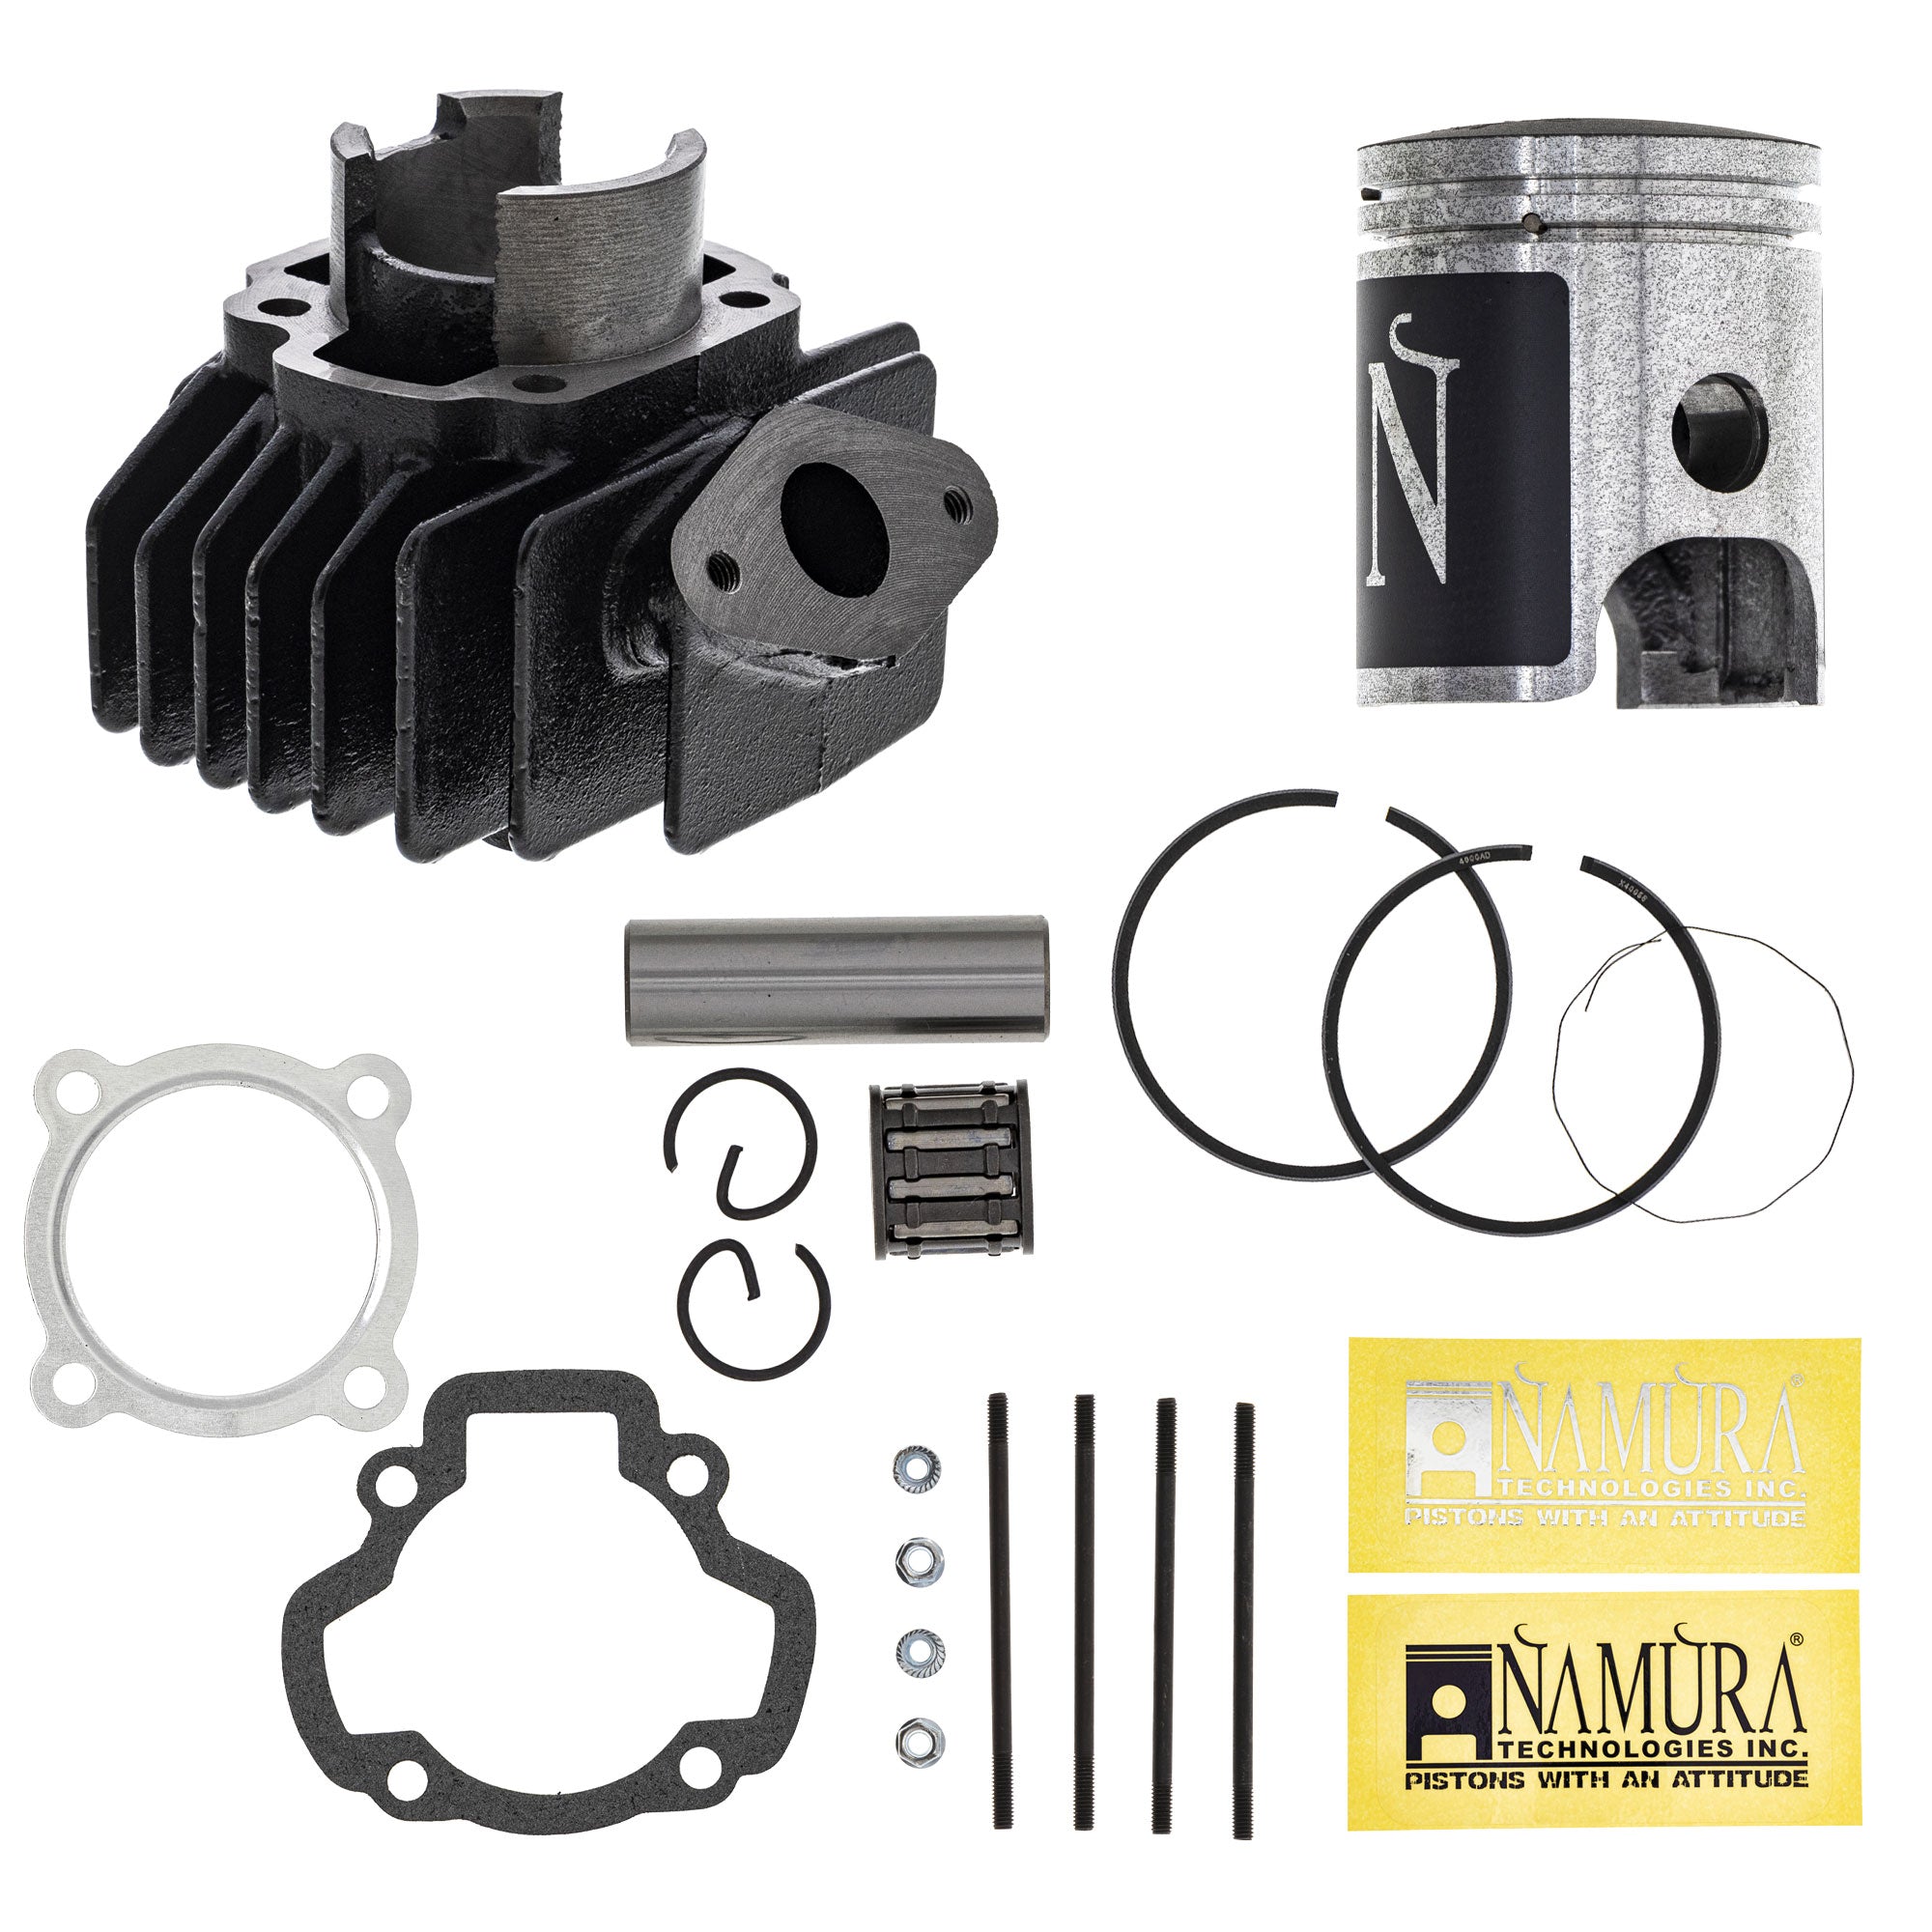 Cylinder Namura Piston Gasket Spark Plug Stud Kit for PW50 NICHE MK1012526